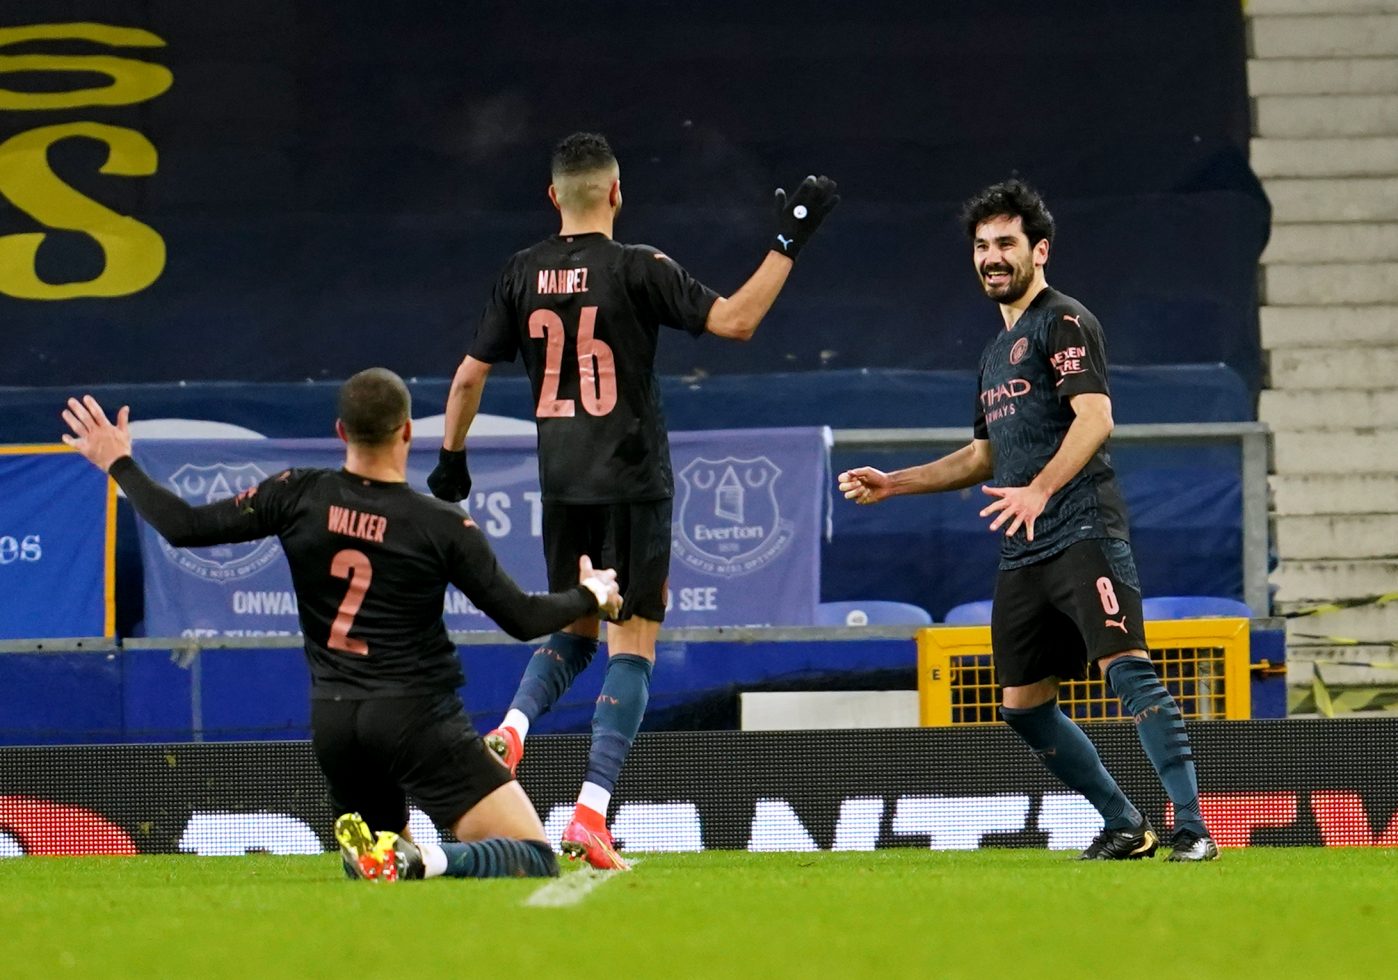 FA Cup Quarter-Final between Everton and Manchester City - Gündogan celebrates